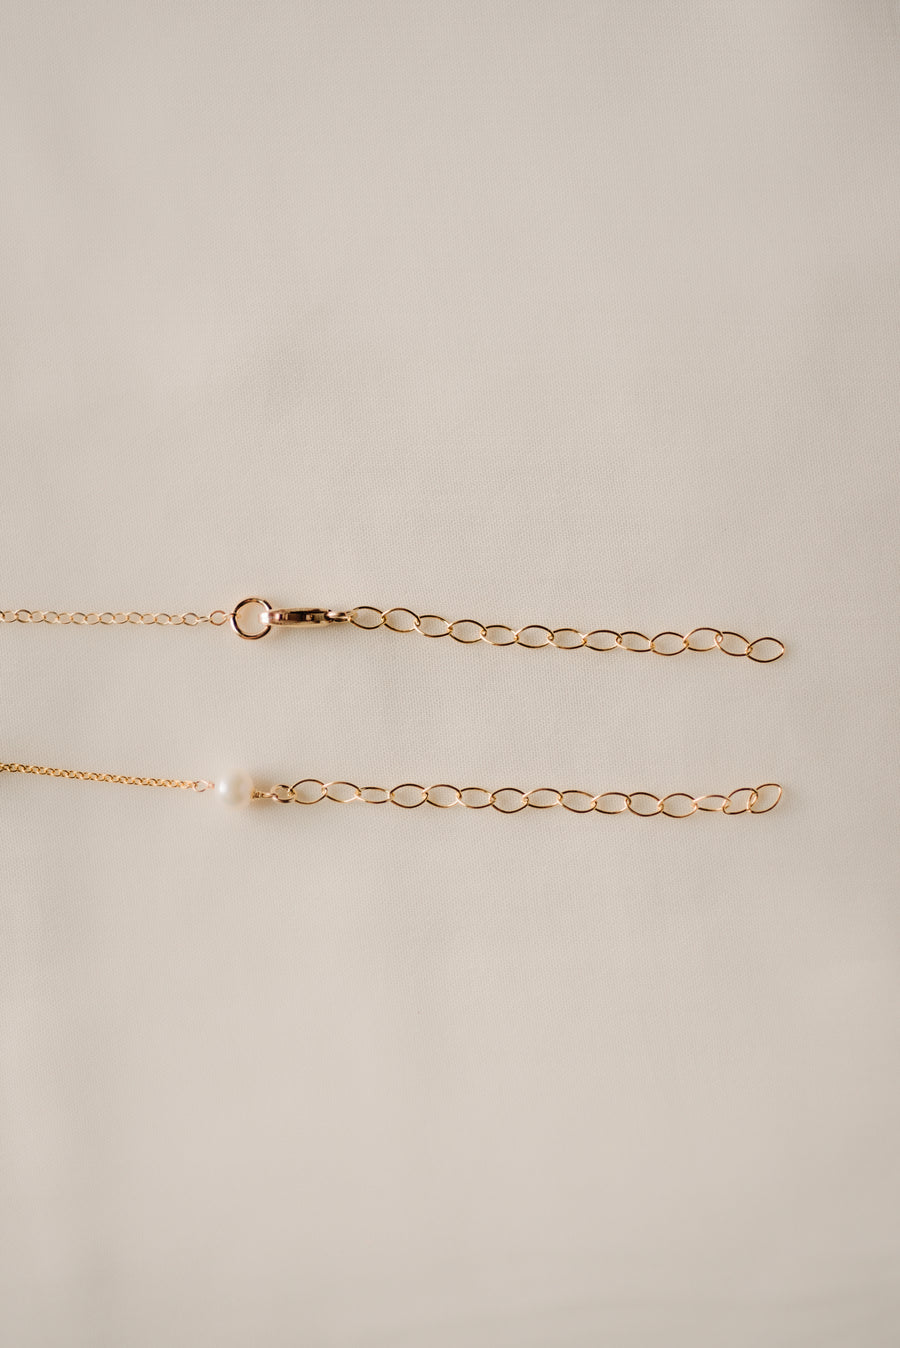 Necklace/Bracelet Extender